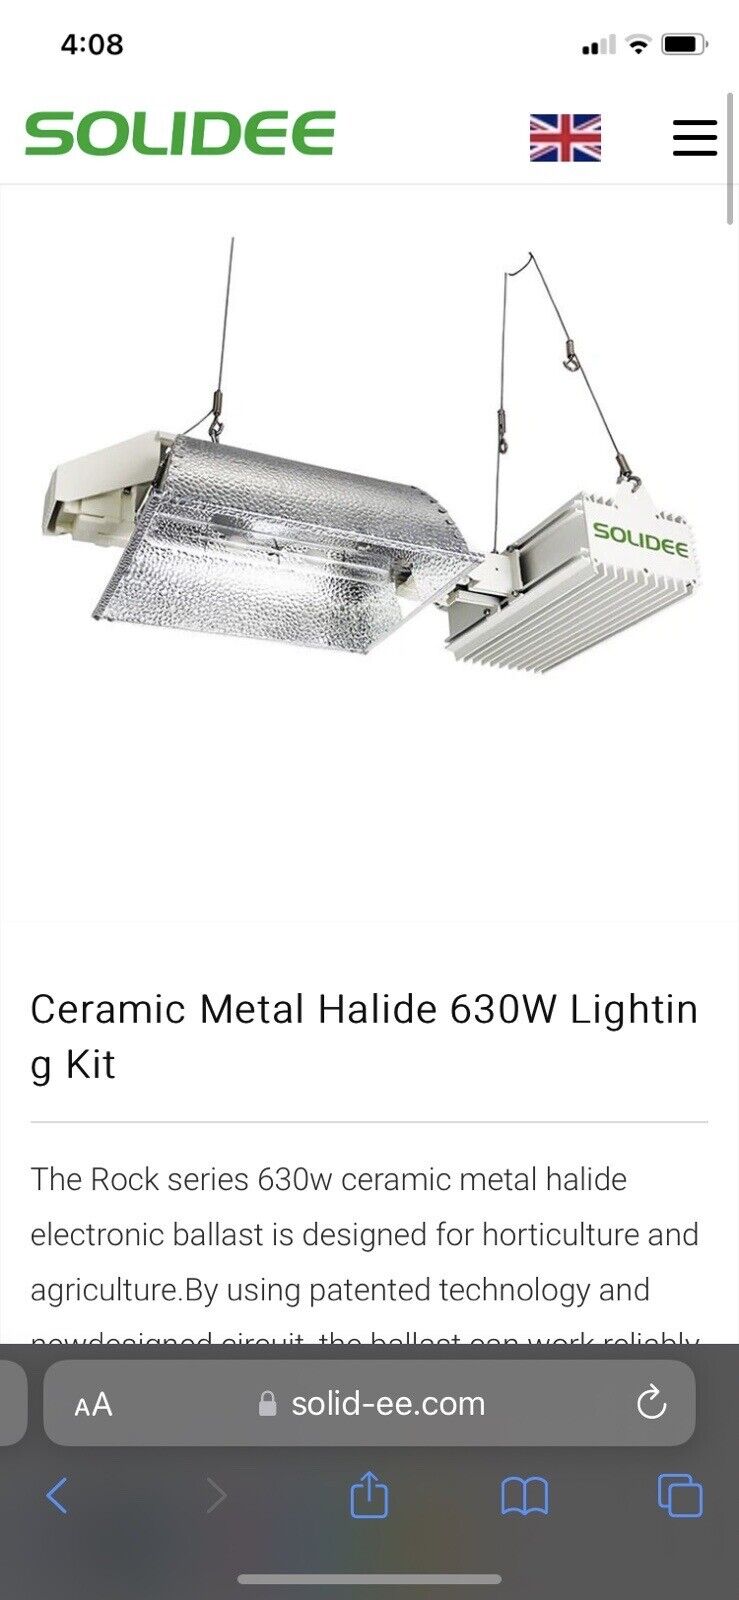 SOLIDEE Ceramic Metal Halide 630w Grow Light